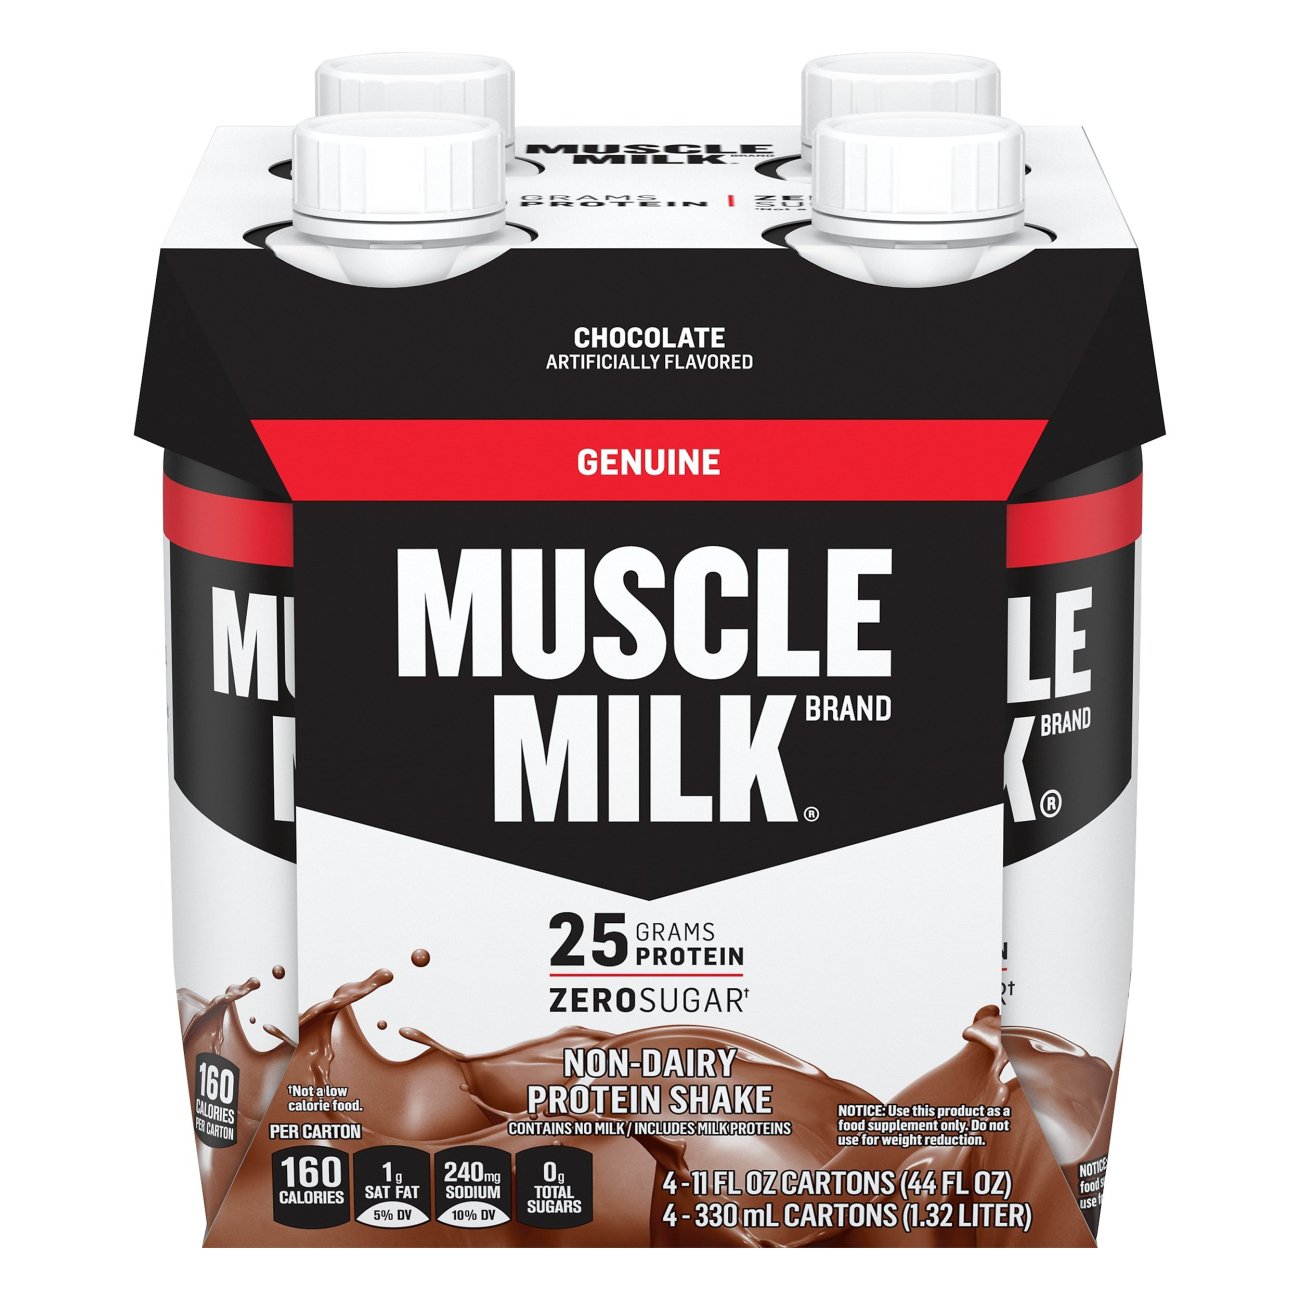 Muscle Milk Genuine Chocolate Non